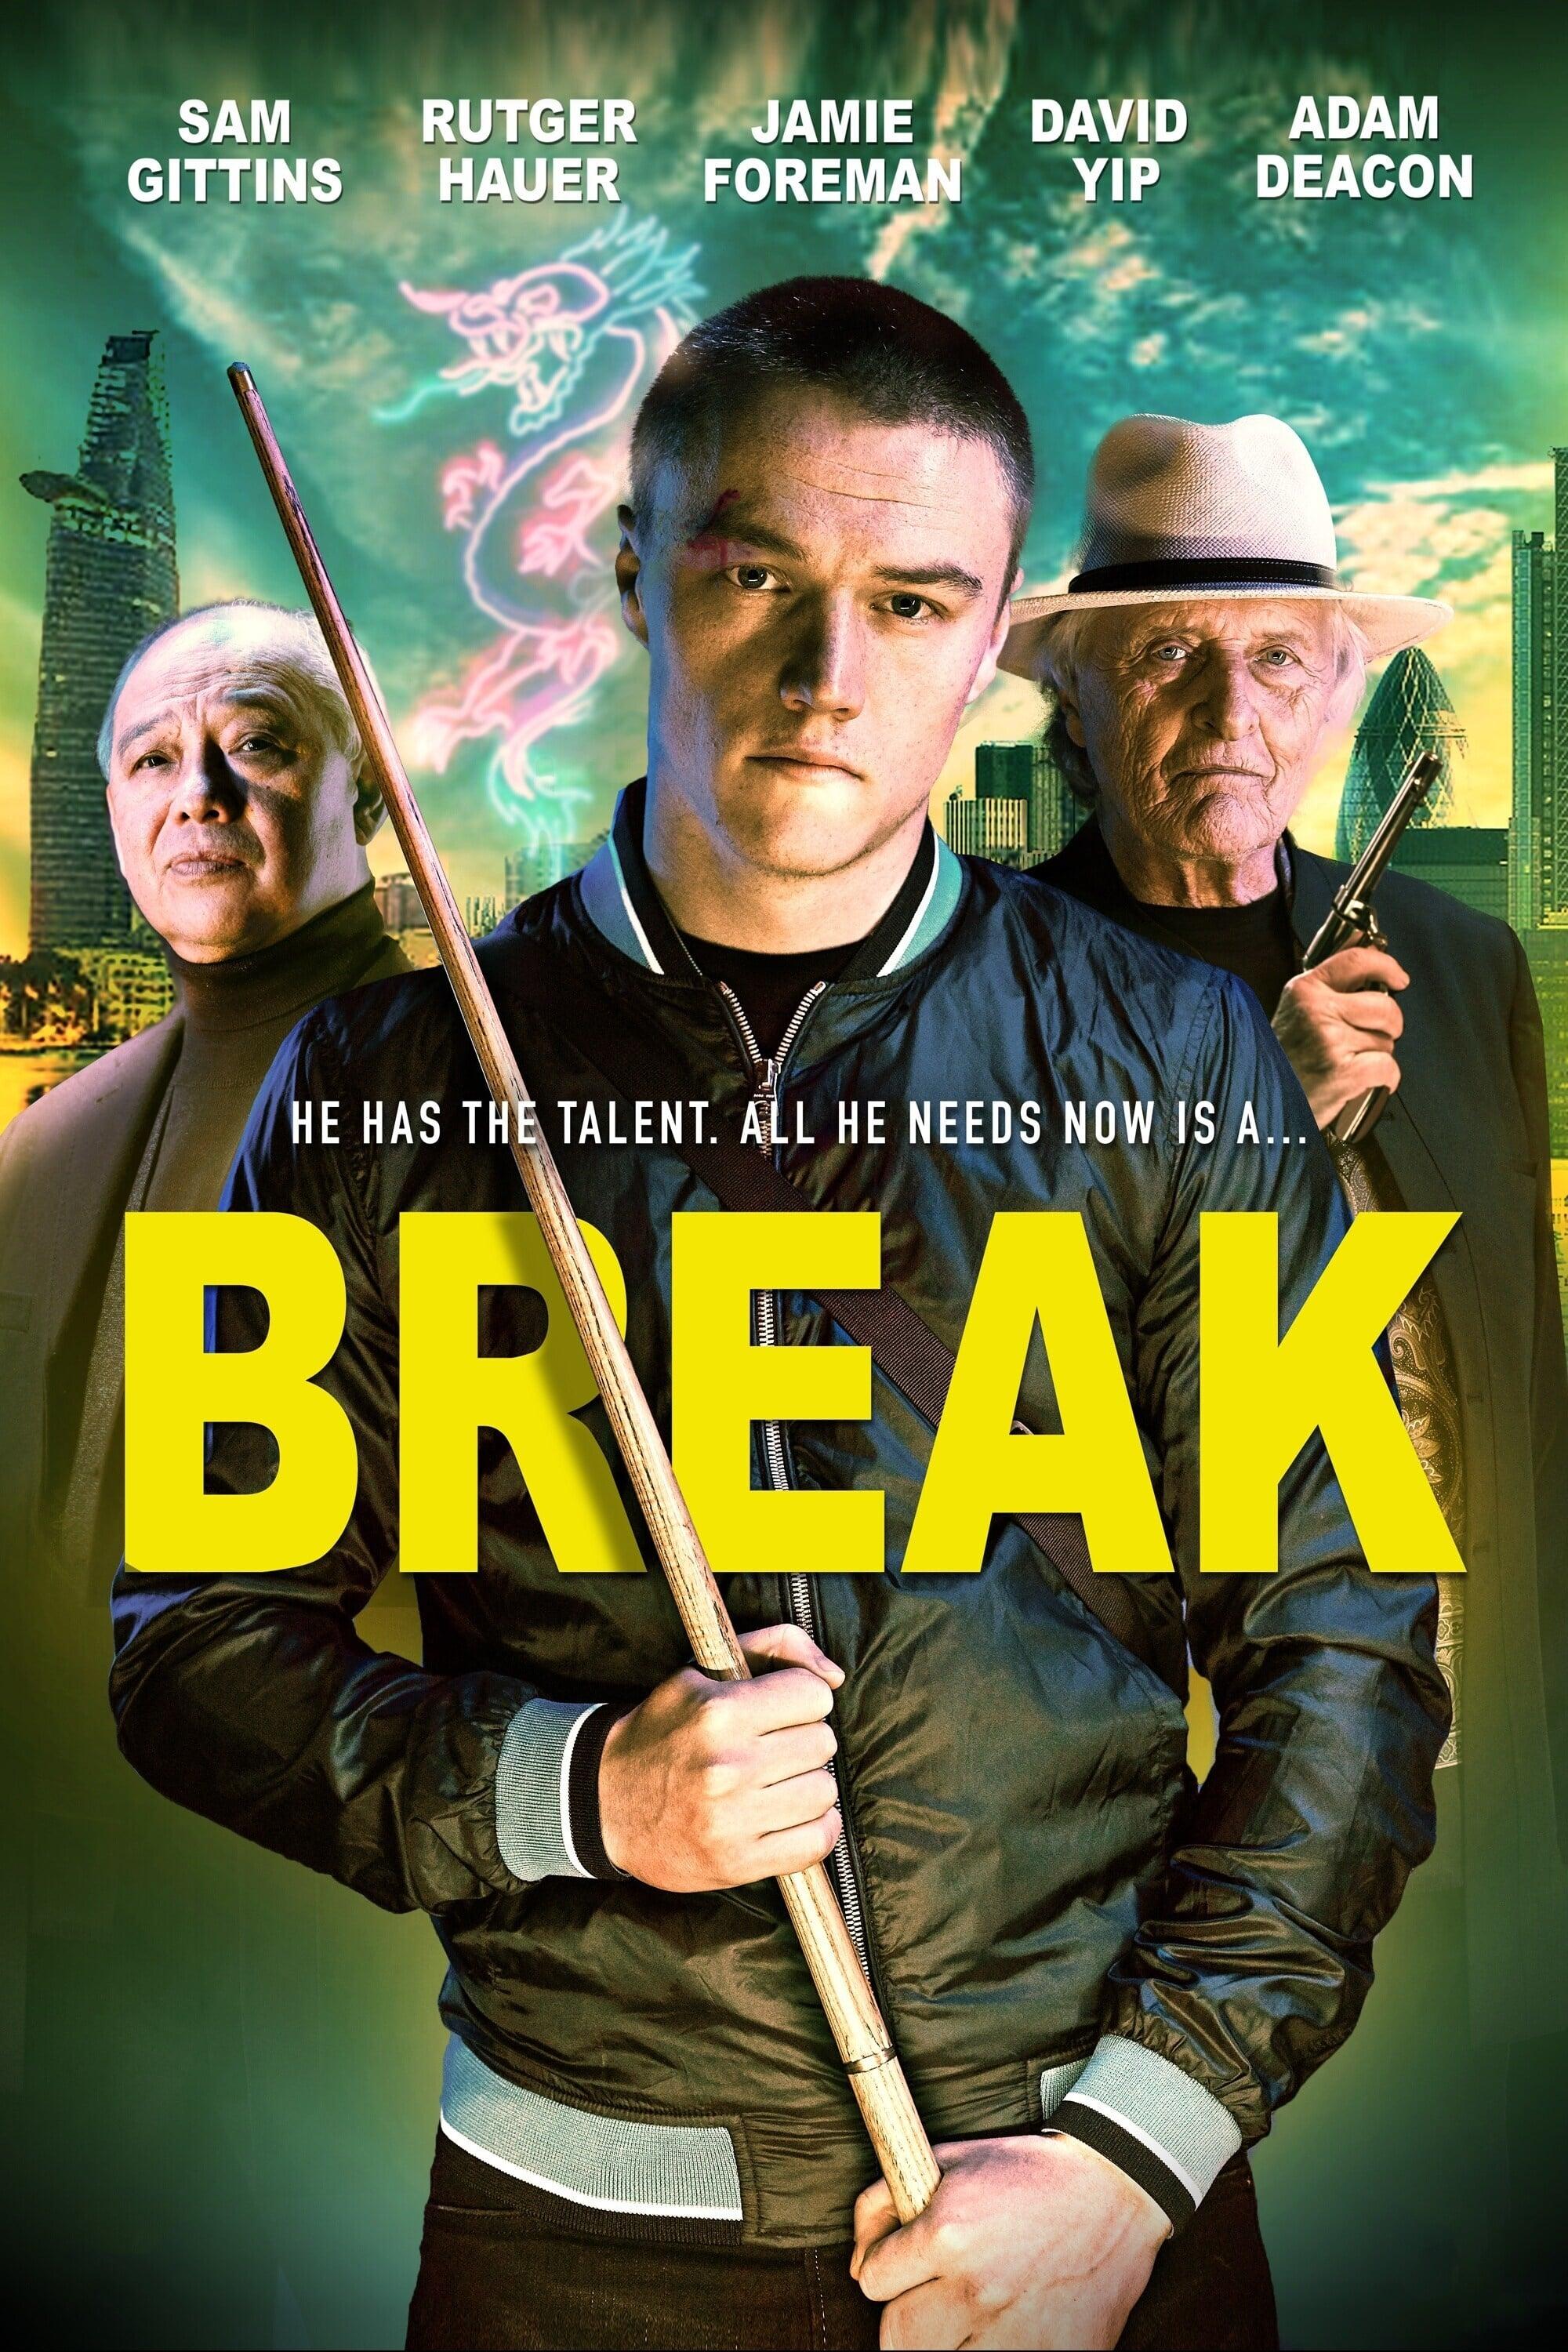 Break poster